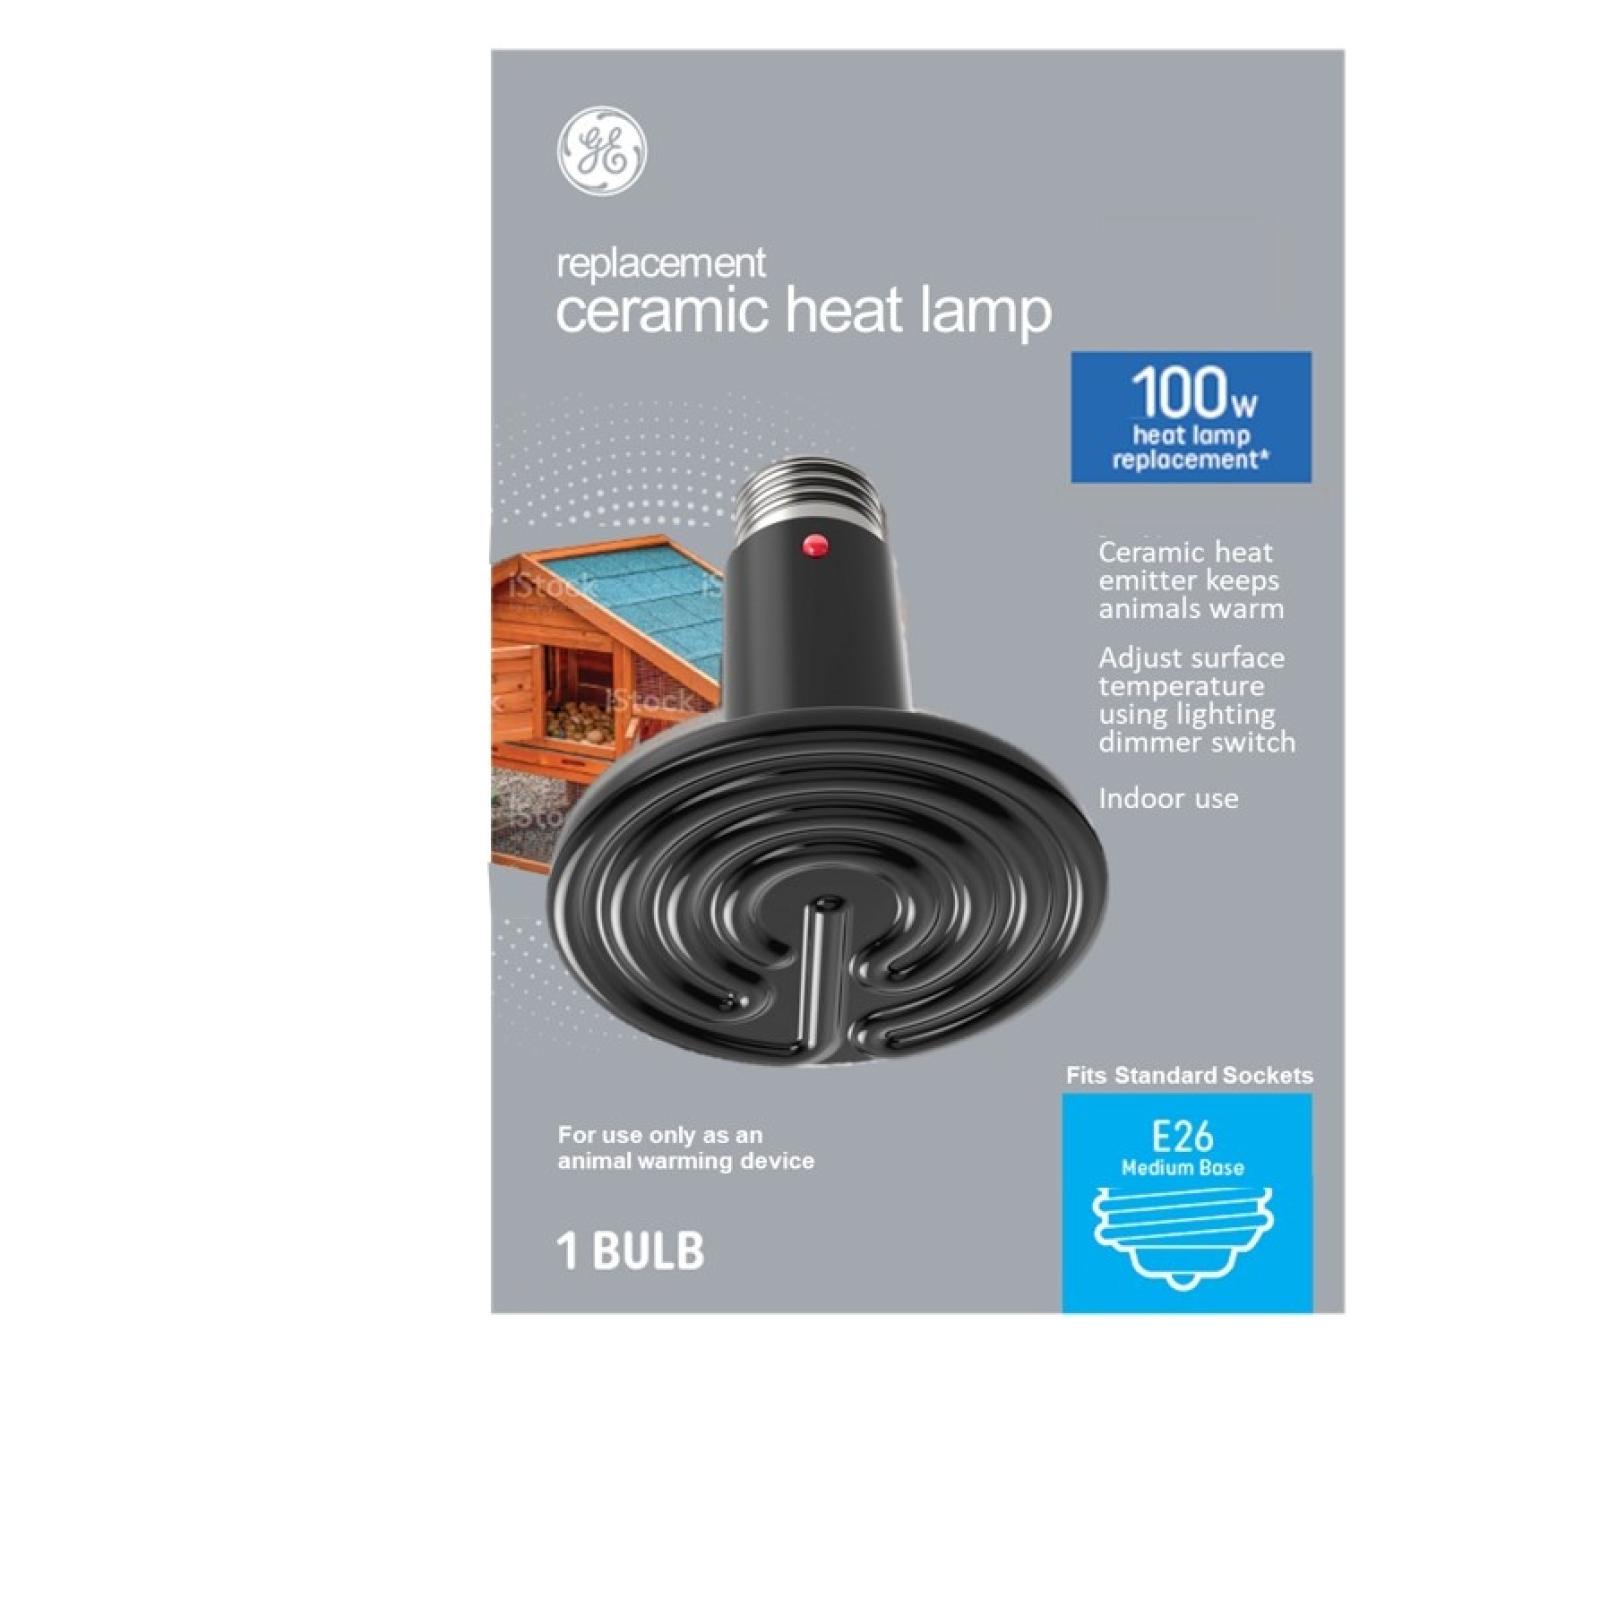 GT-Lite Ceramic Heat Lamp 100W Replacement